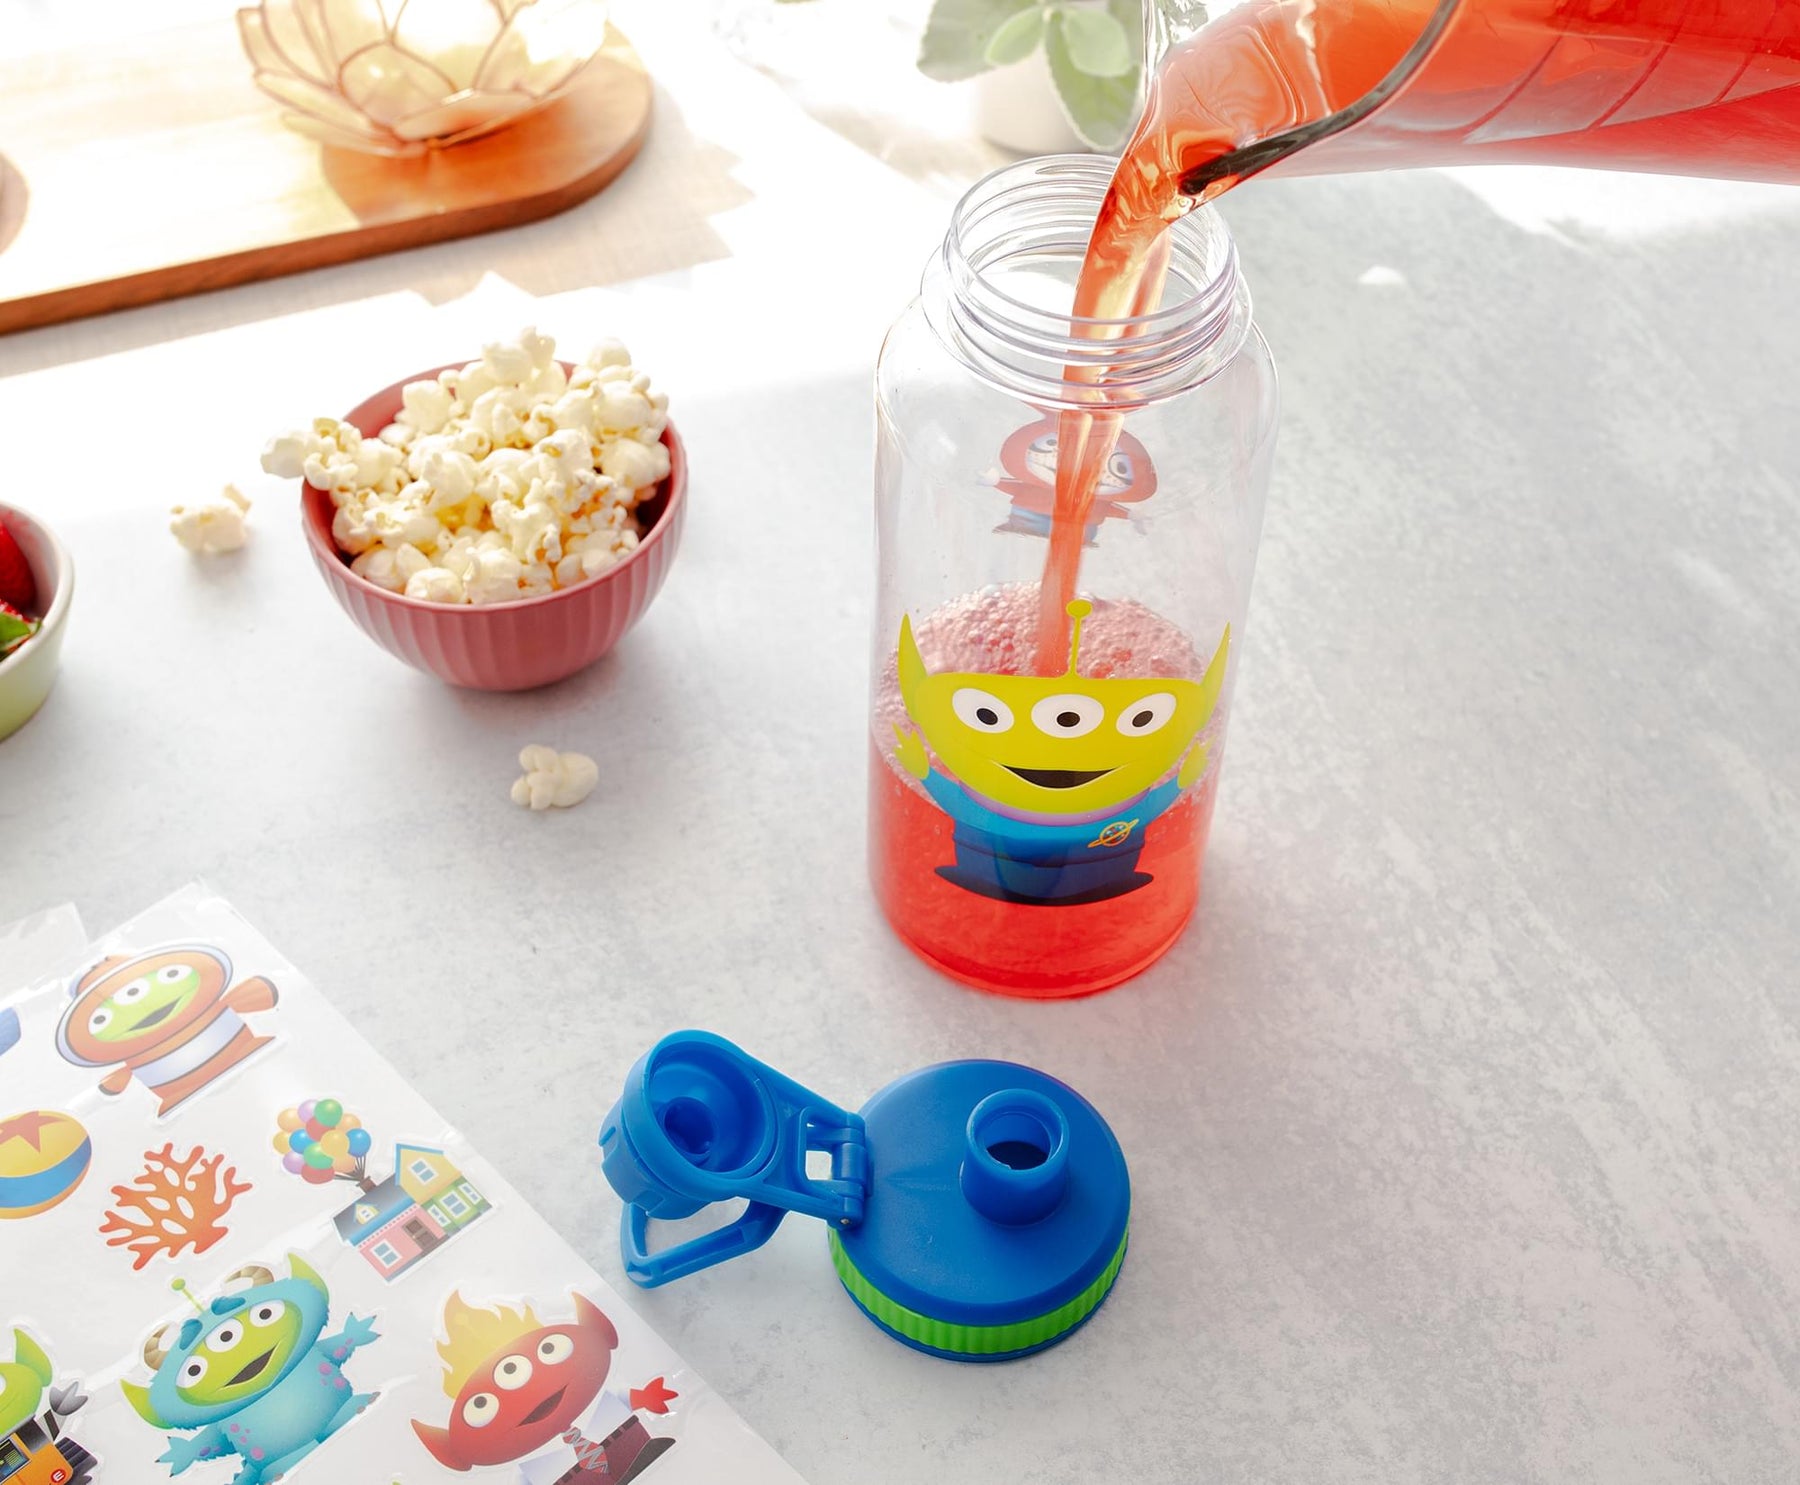 Disney Pixar Toy Story Alien 32-Ounce Twist Spout Water Bottle and Sticker Set